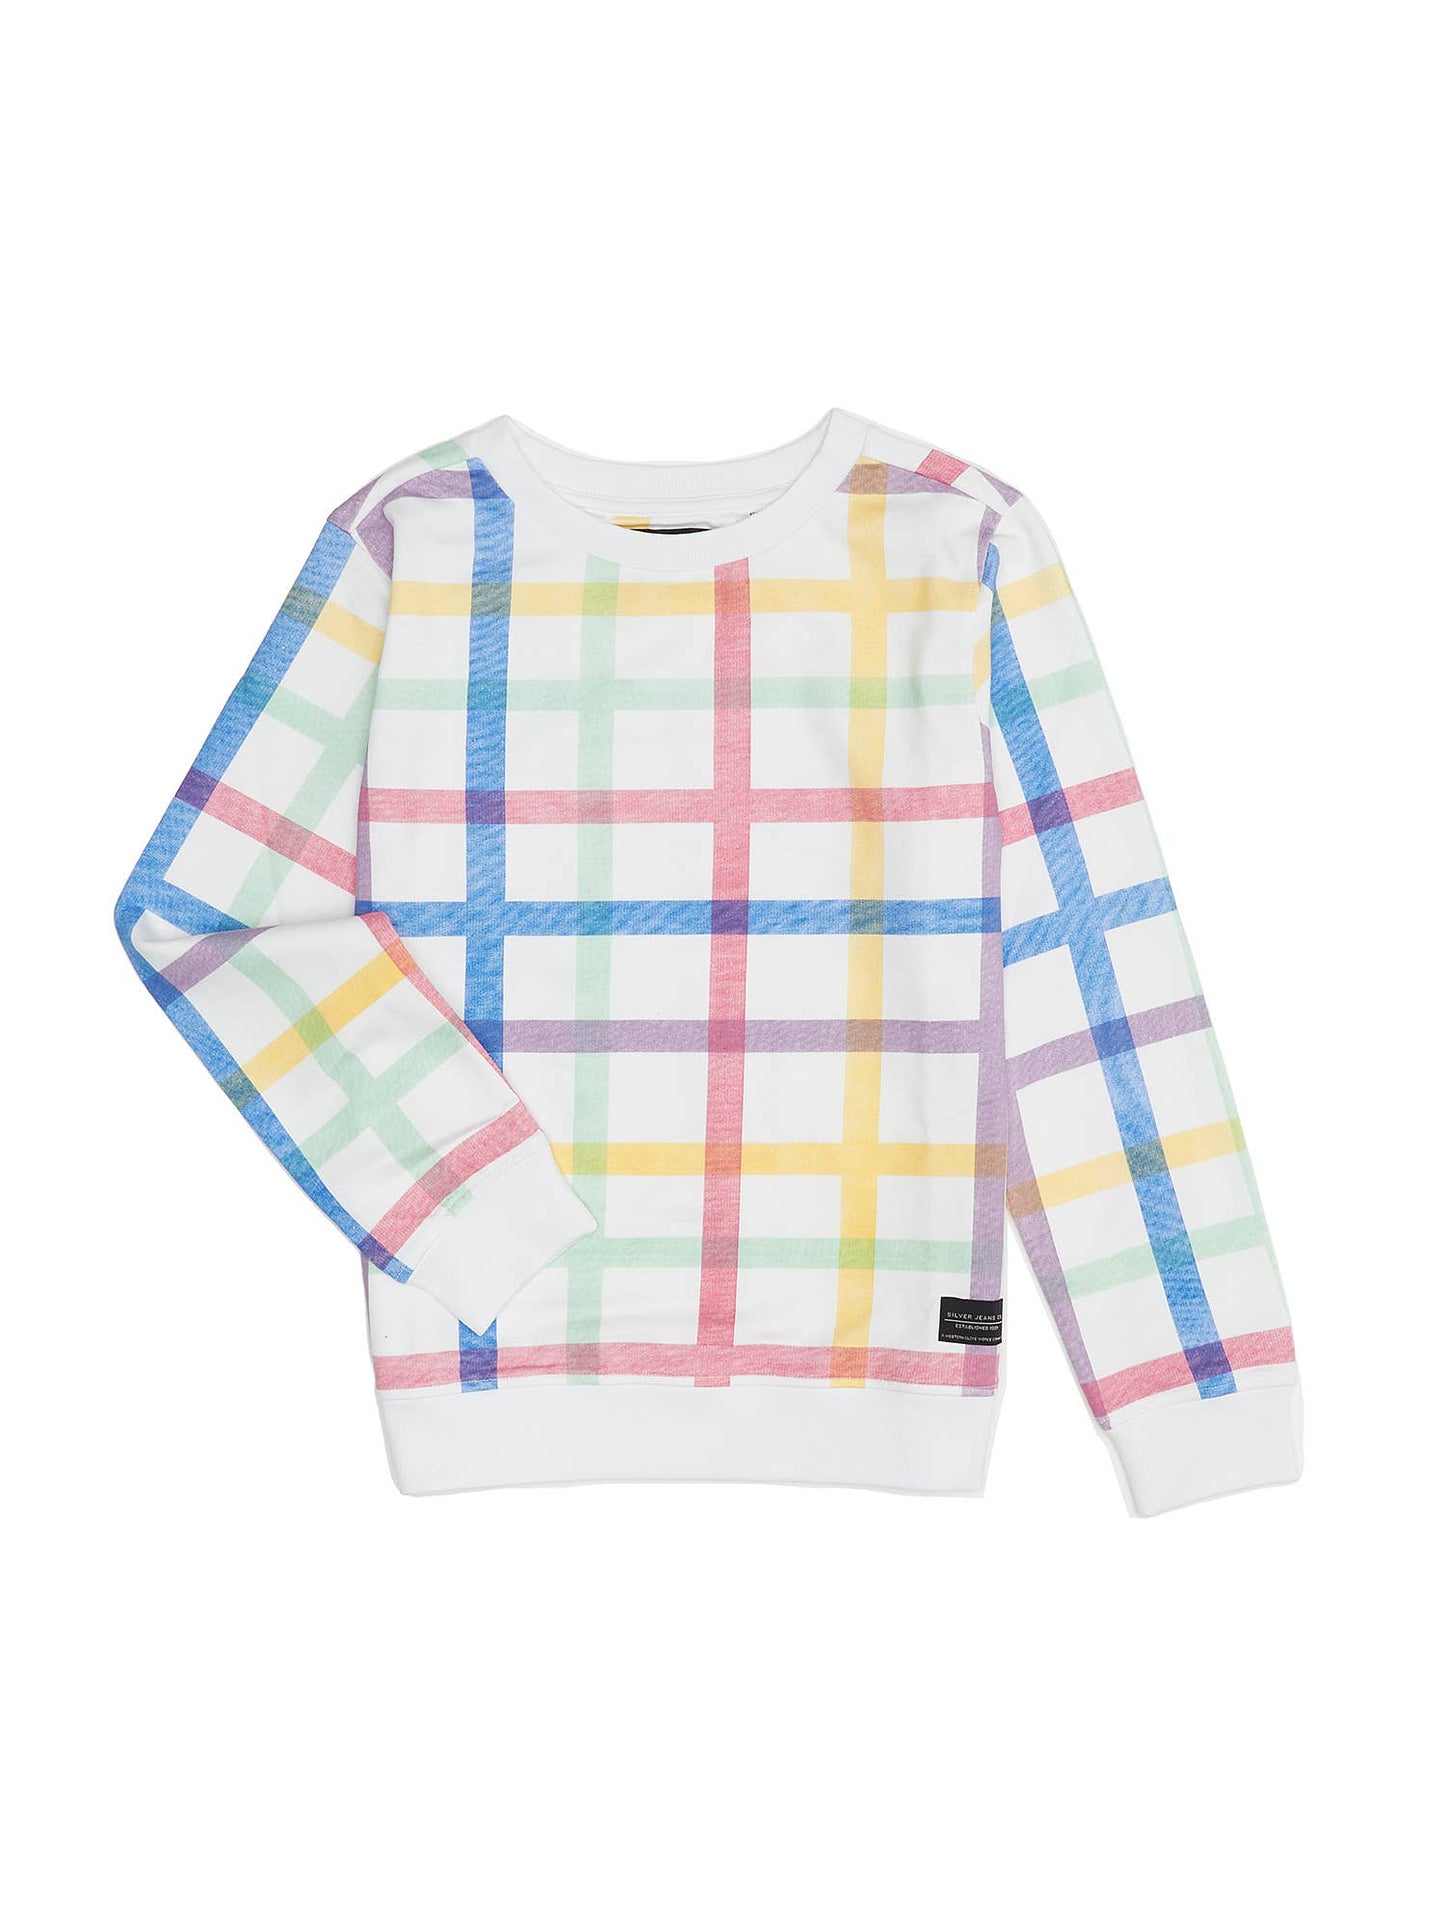 Girls Multi Color Sweater